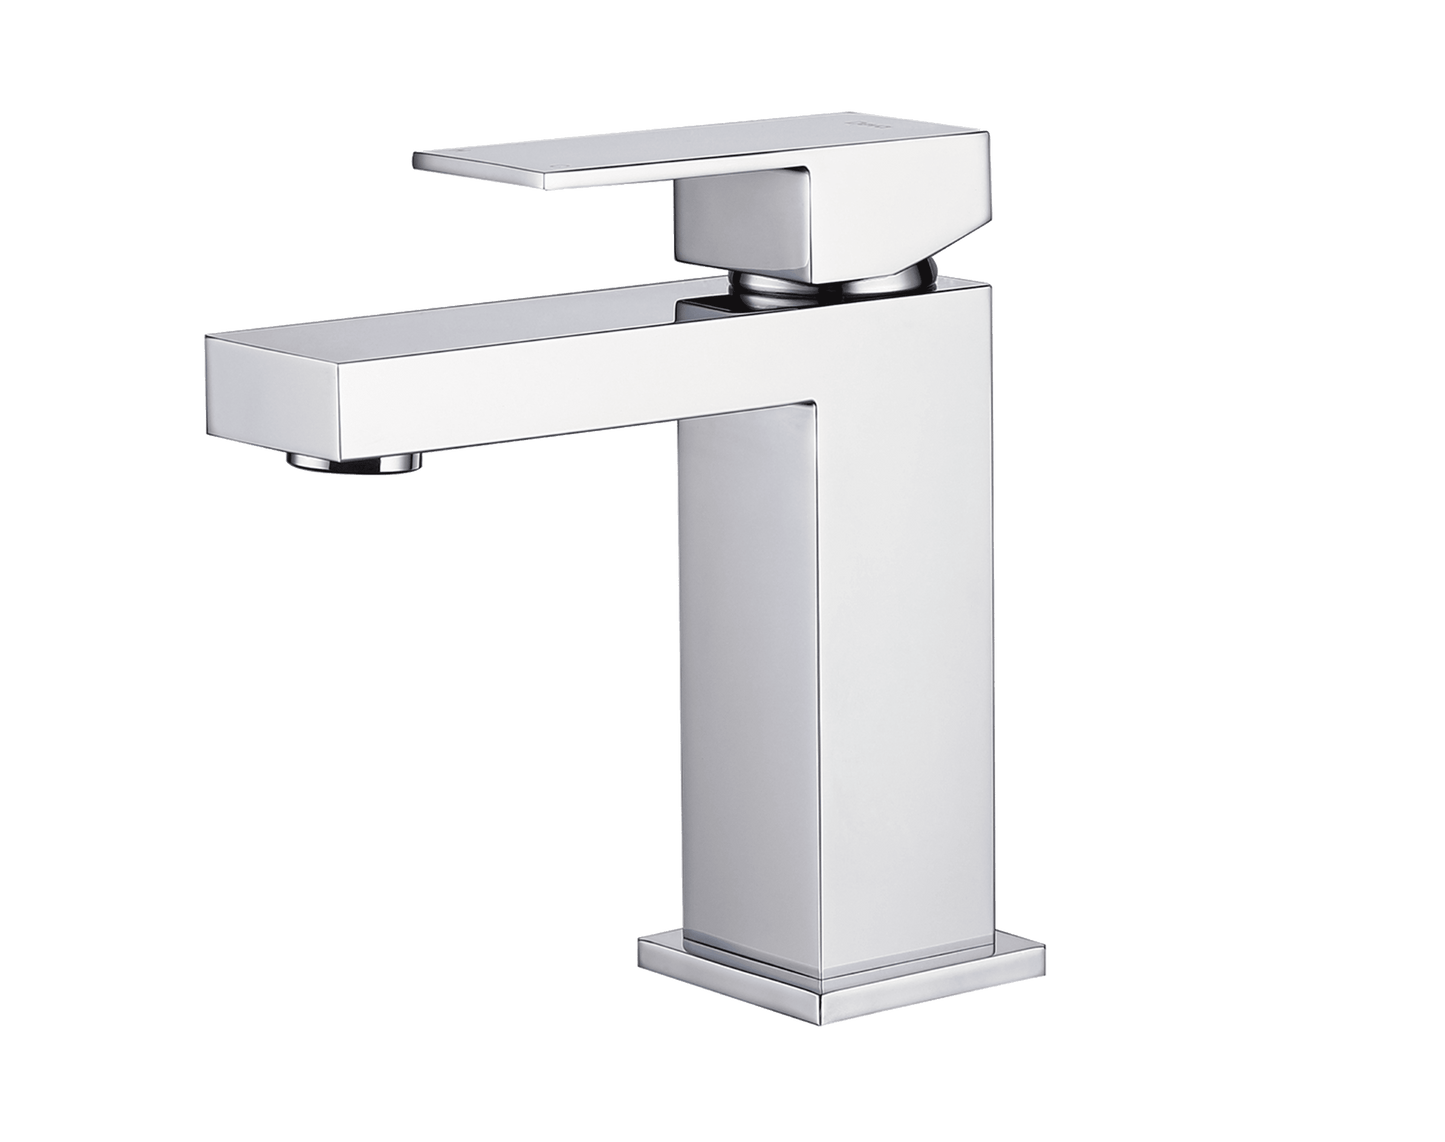 MJAS5101 - Single Hole Bathroom Faucet